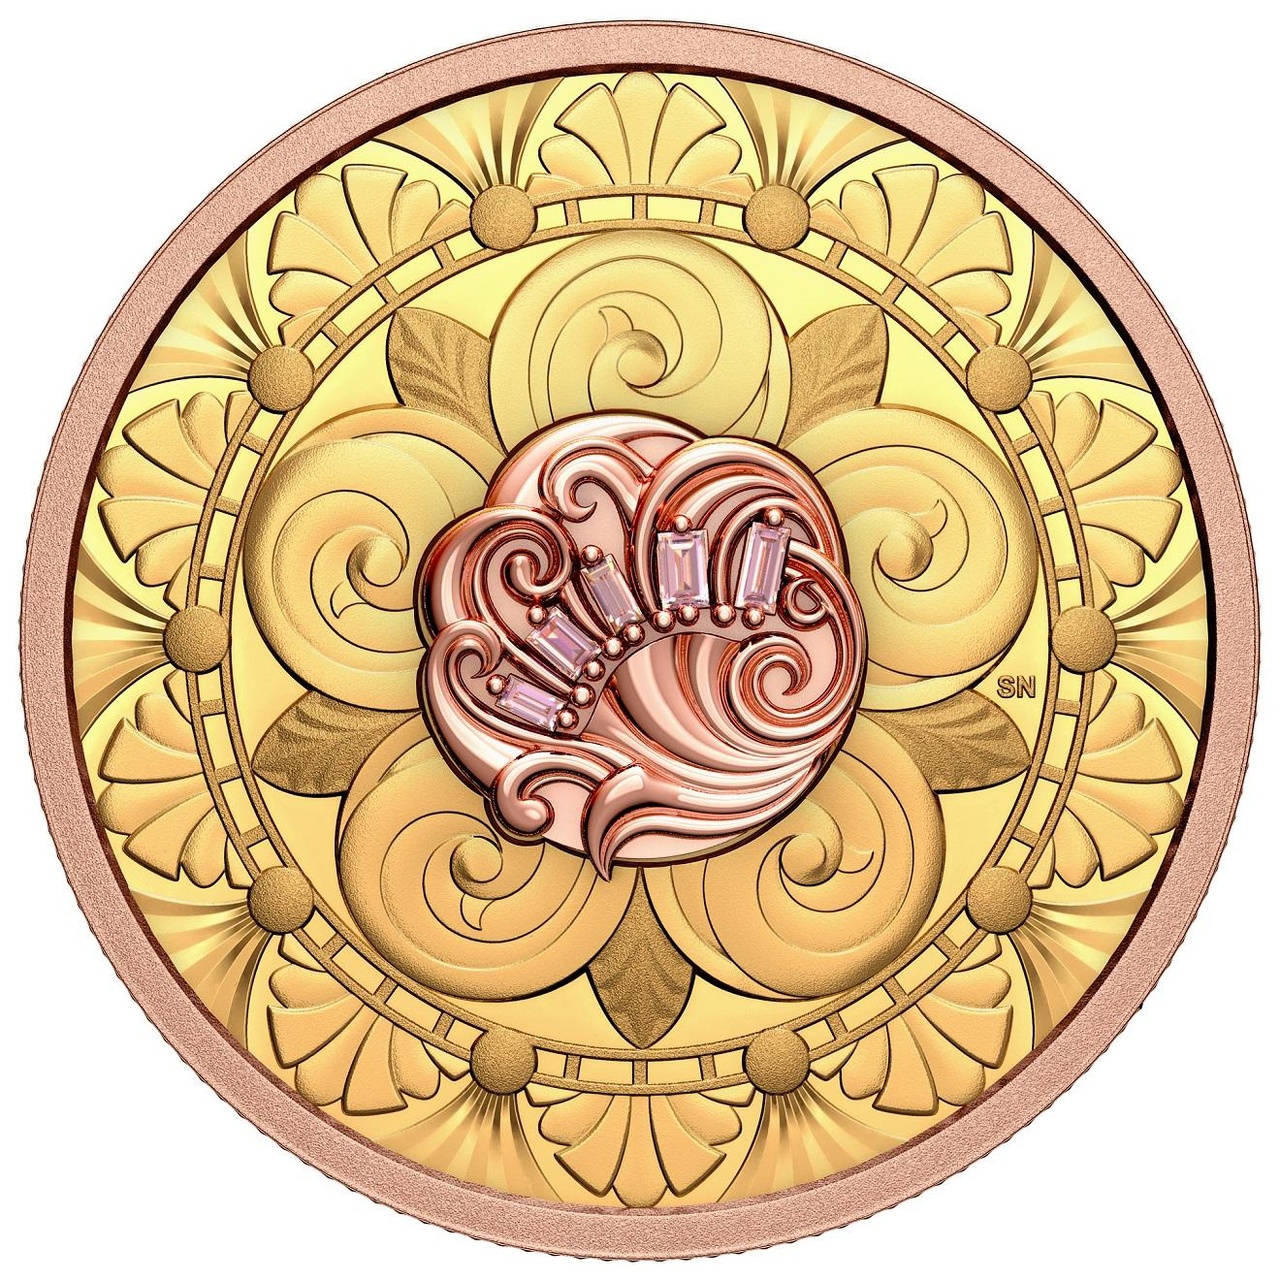 Treasure以 1 安士之 99.99% 純金鑄造，其背面設計以一圈裝飾藝術圖案環繞中央櫻花，花瓣泛有漩渦，共有五顆總重 0.06 克拉 (tcw) 的艷彩粉鑽，正面飾有靈感來自背面櫻花花瓣的田野圖案，以及英國女王伊麗莎白二世肖像，全球限量鑄造 400 枚。 